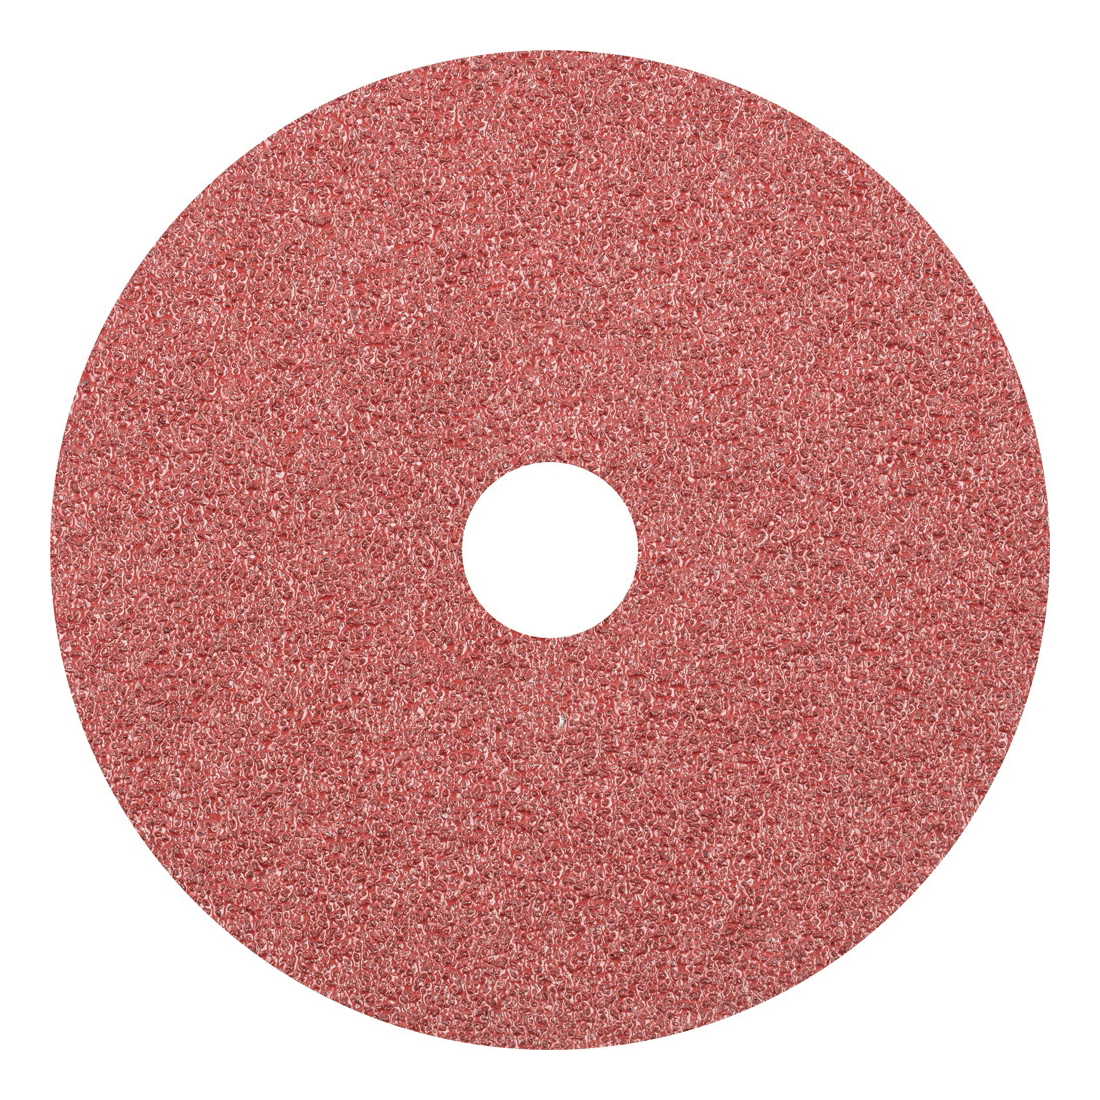 PFERD 62503 Standard Coated Abrasive Disc, 5 in Dia, 7/8 in Center Hole, 36 Grit, Aluminum Oxide Abrasive, Arbor Attachment